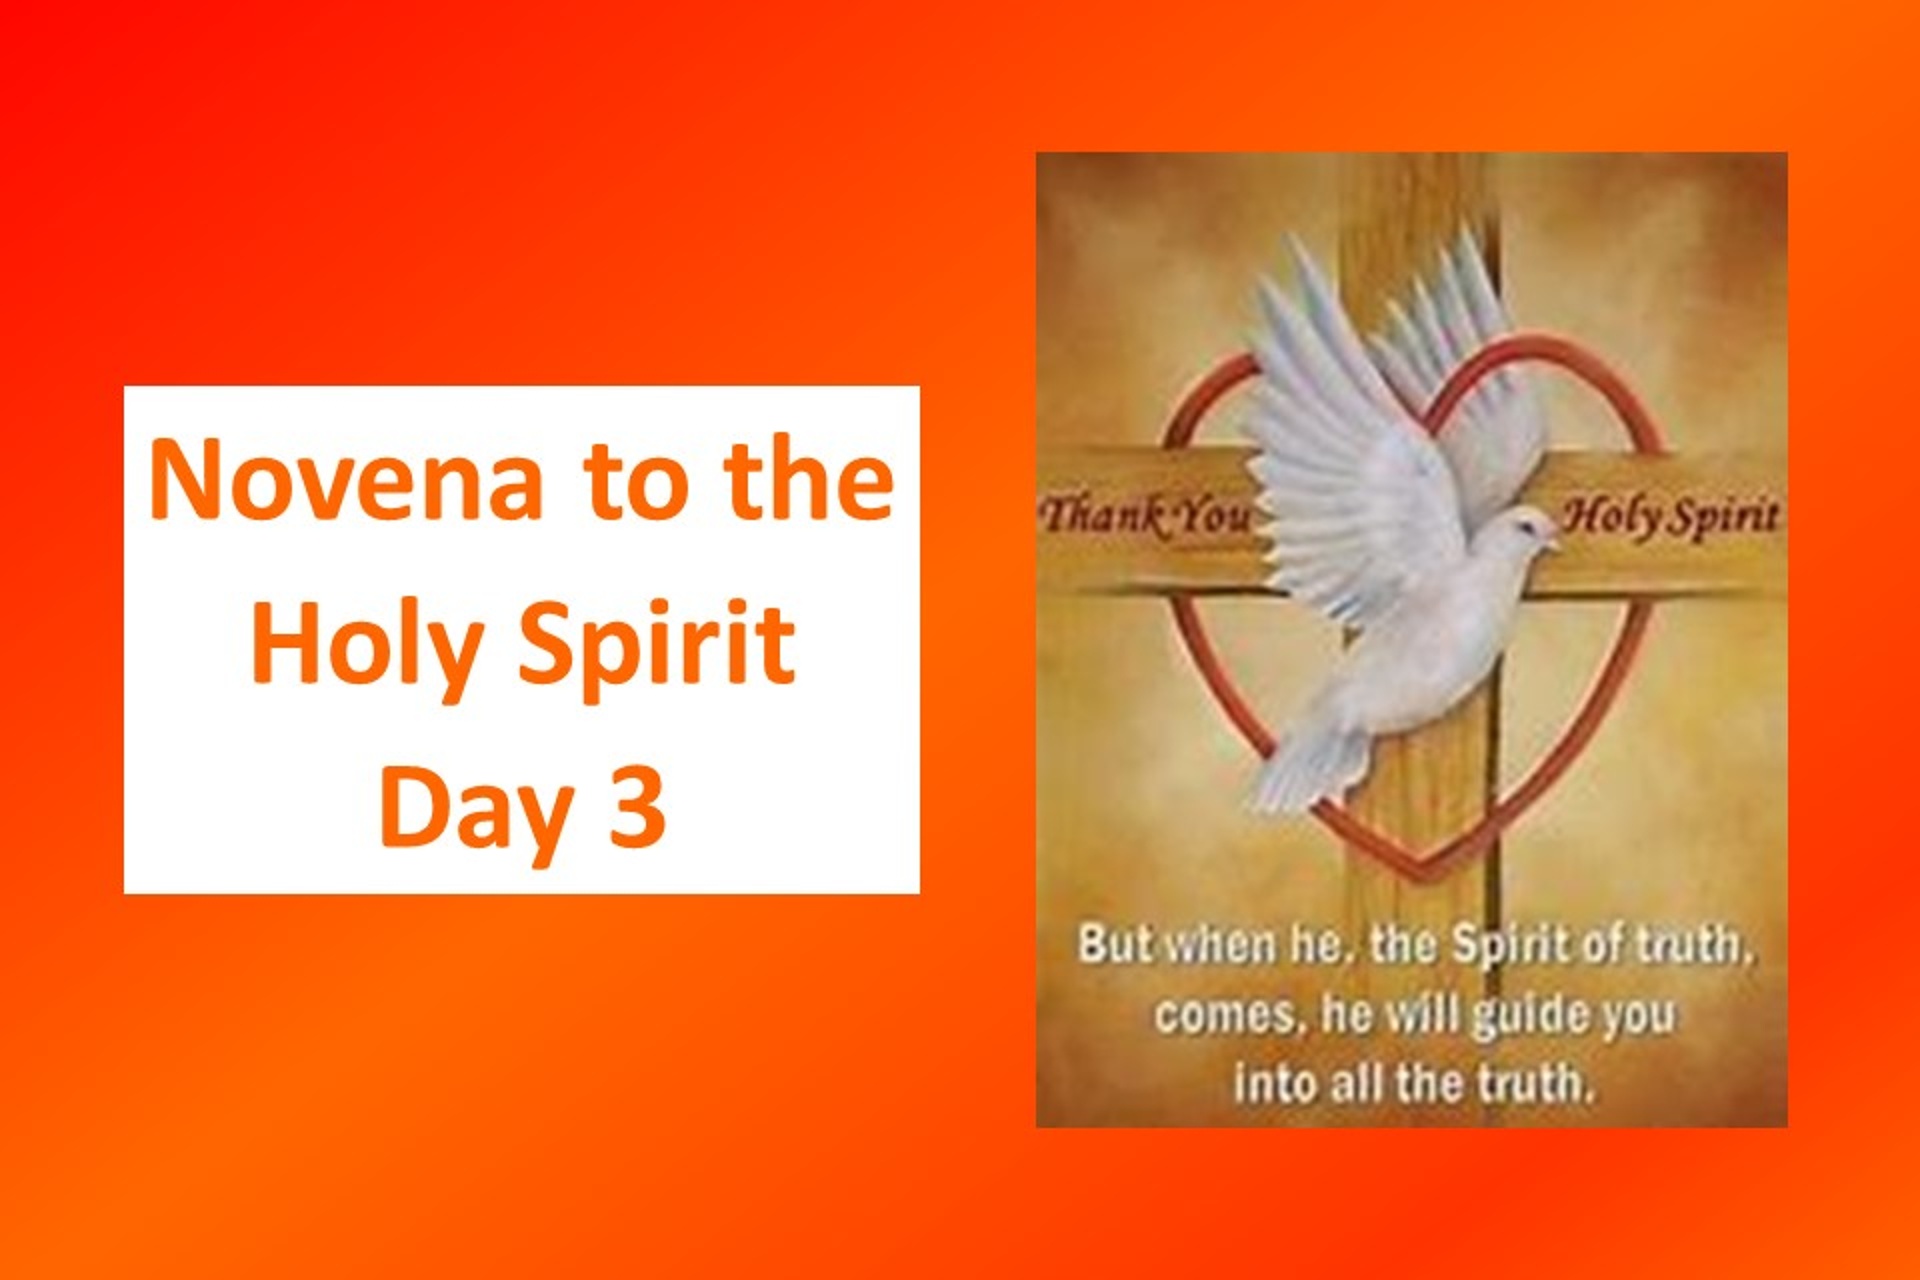 Novena to the Holy Spirit - Day 3